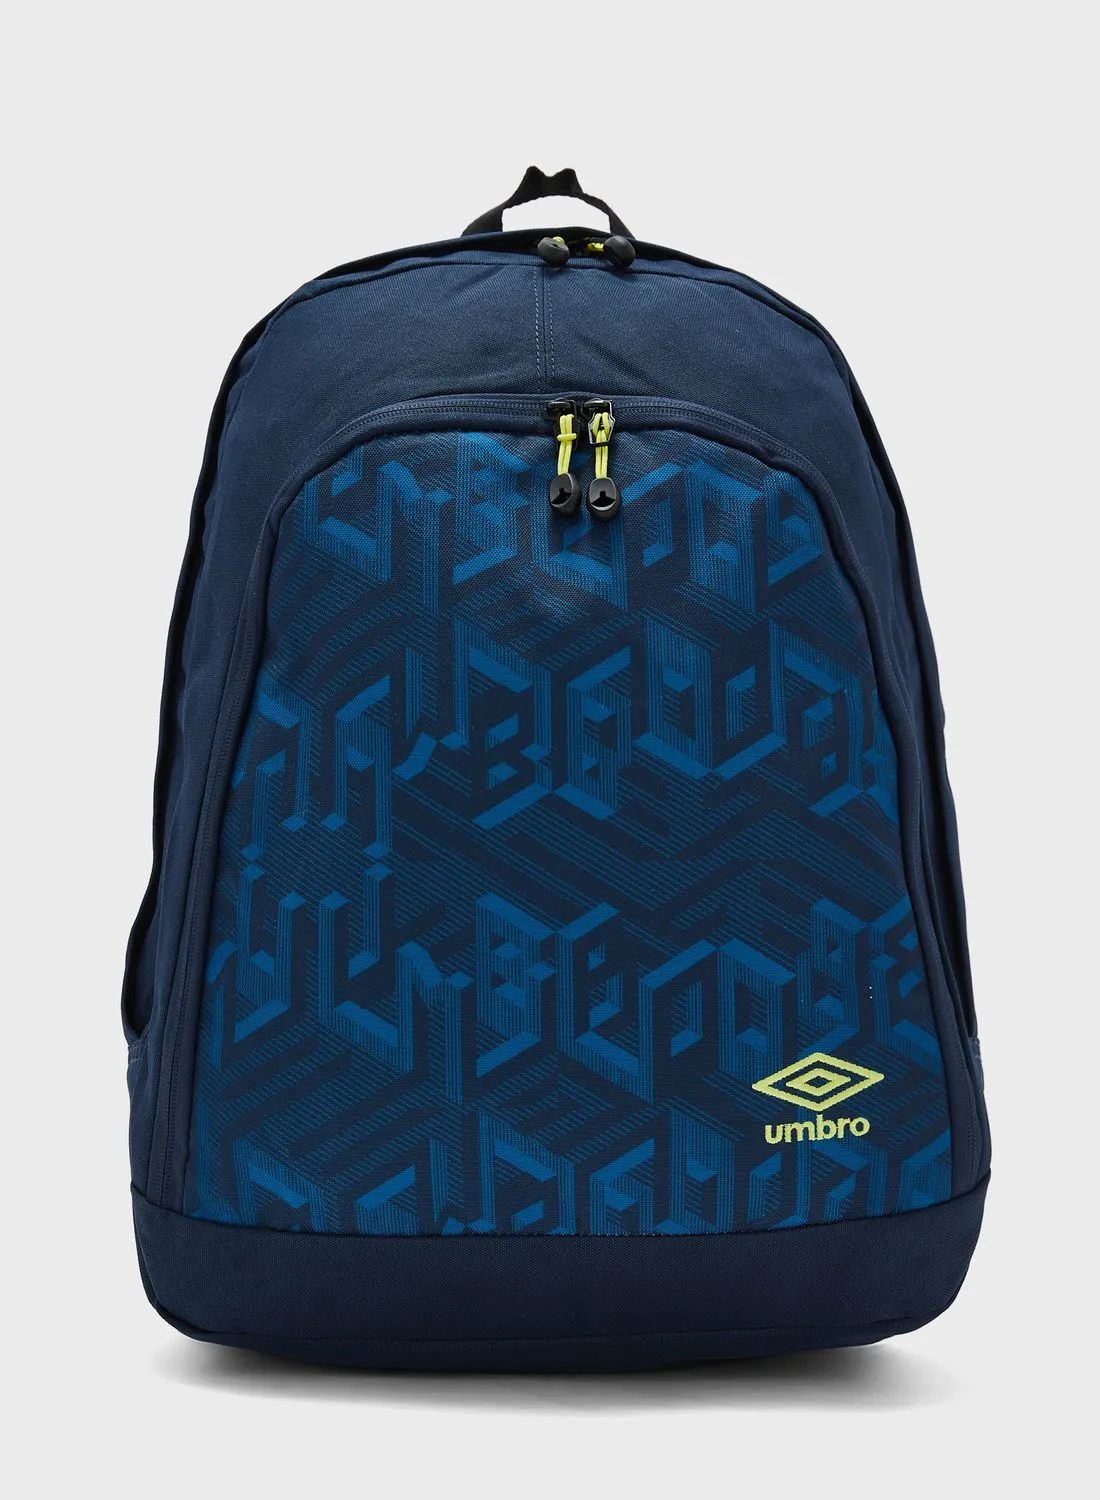 umbro Logo Backpack